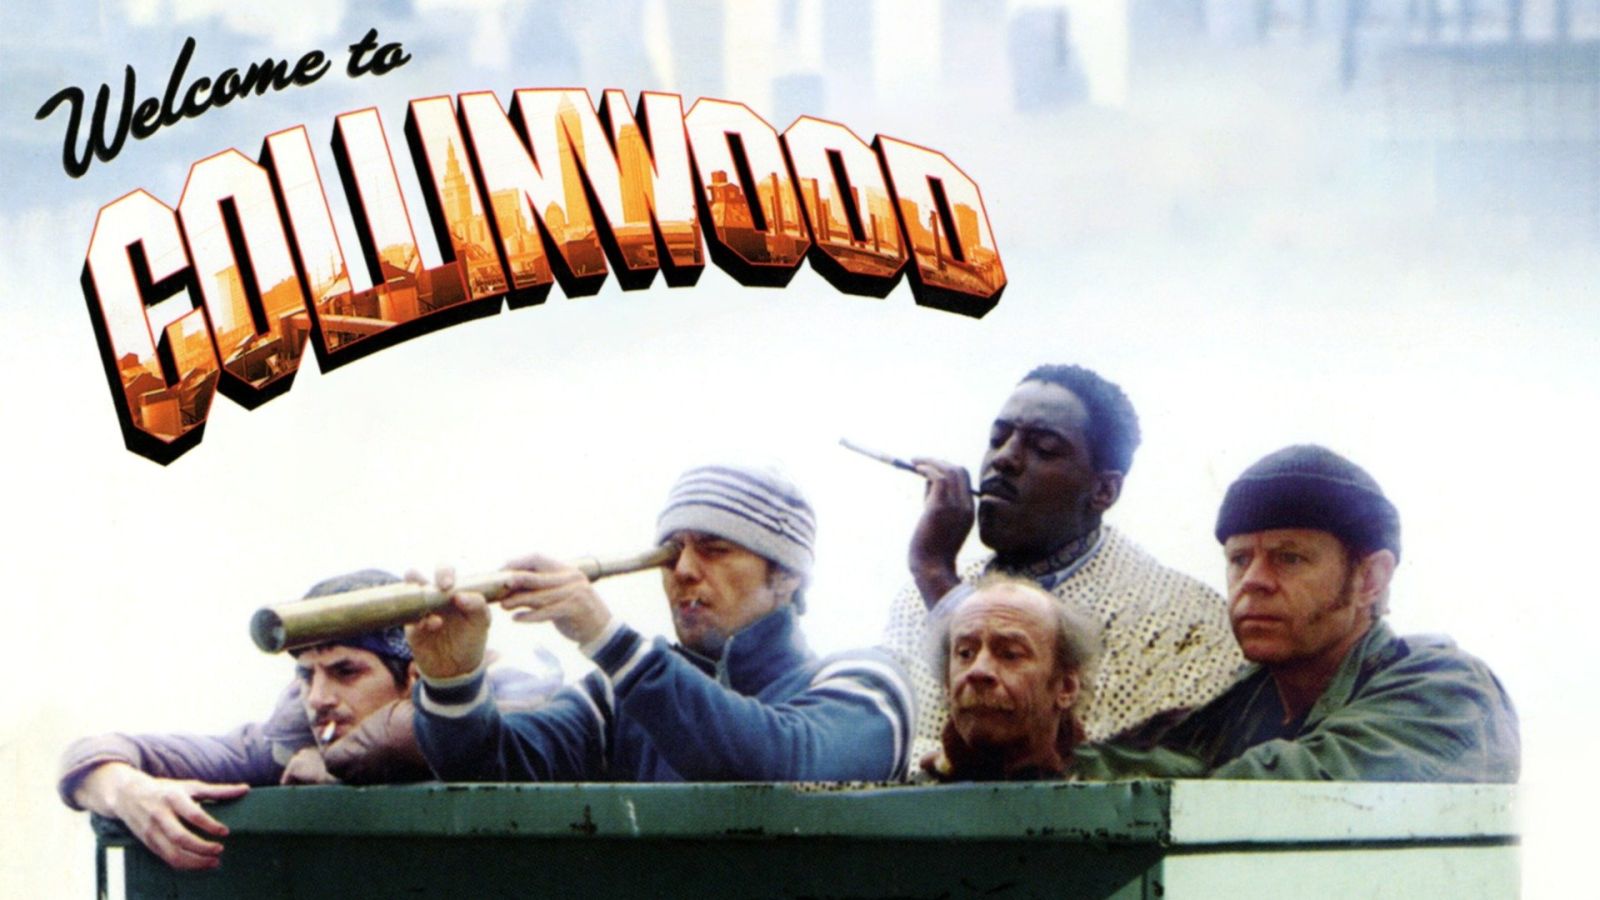 Phi vụ chung thân - Welcome to collinwood